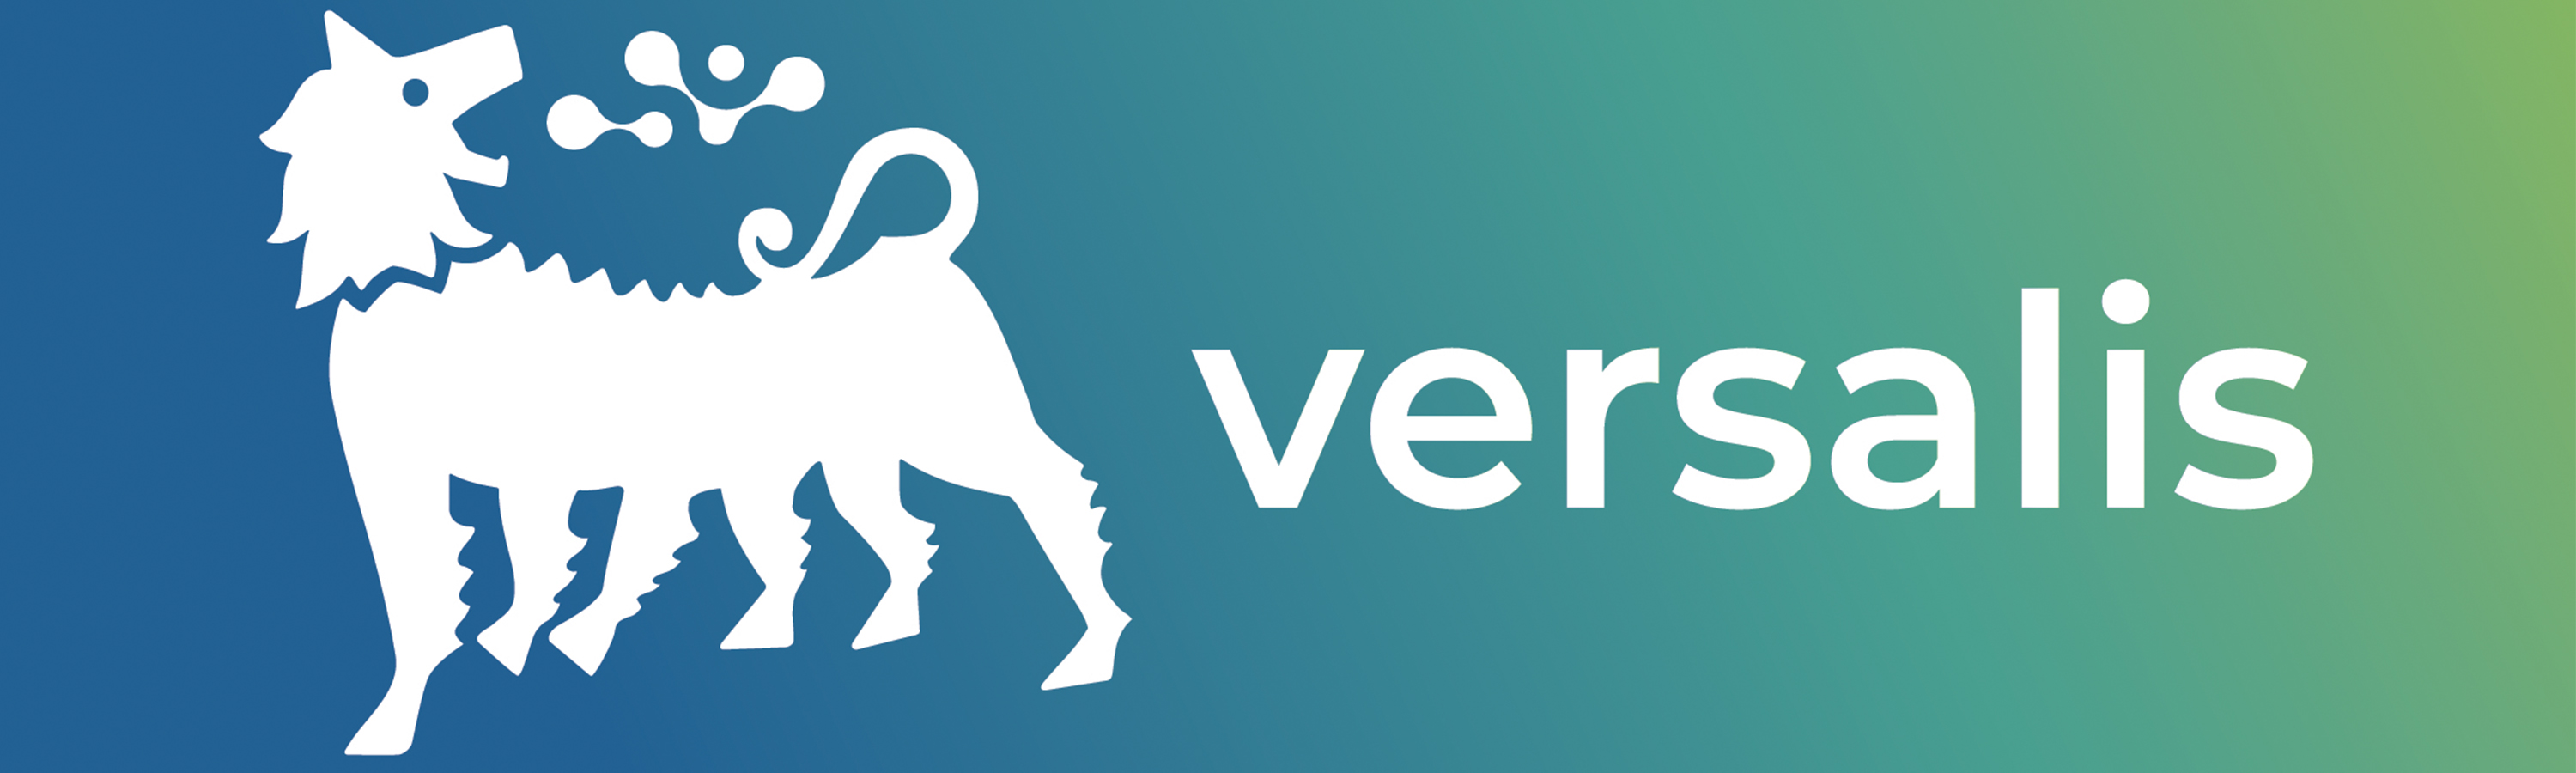 versalis_logo.jpg